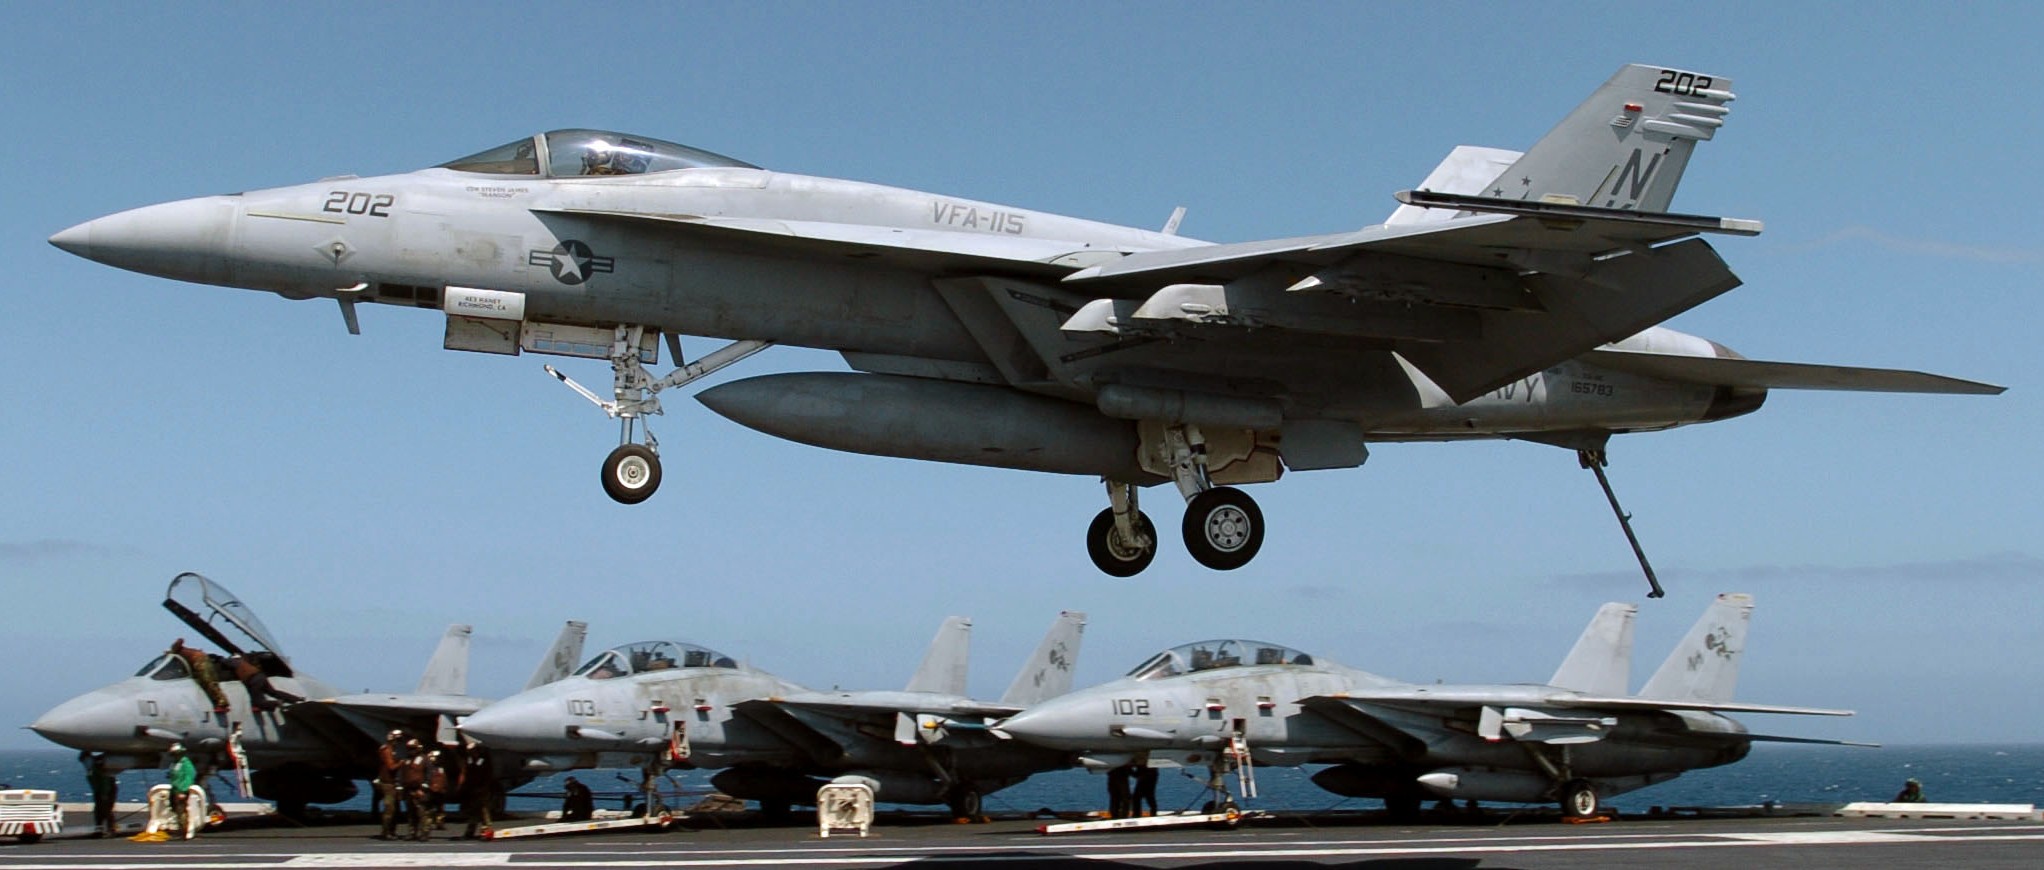 vfa-115 eagles strike fighter squadron f/a-18e super hornet cvw-14 uss john c. stennis cvn-74 2004 54